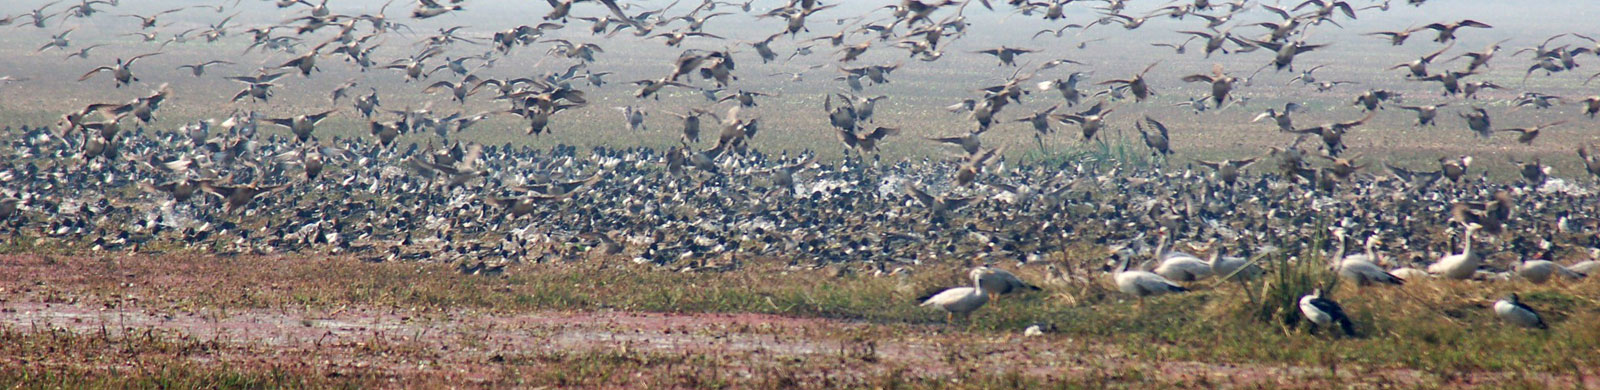 Bharatpur Bird Sanctuary | Keoladeo National Park, Rajasthan India